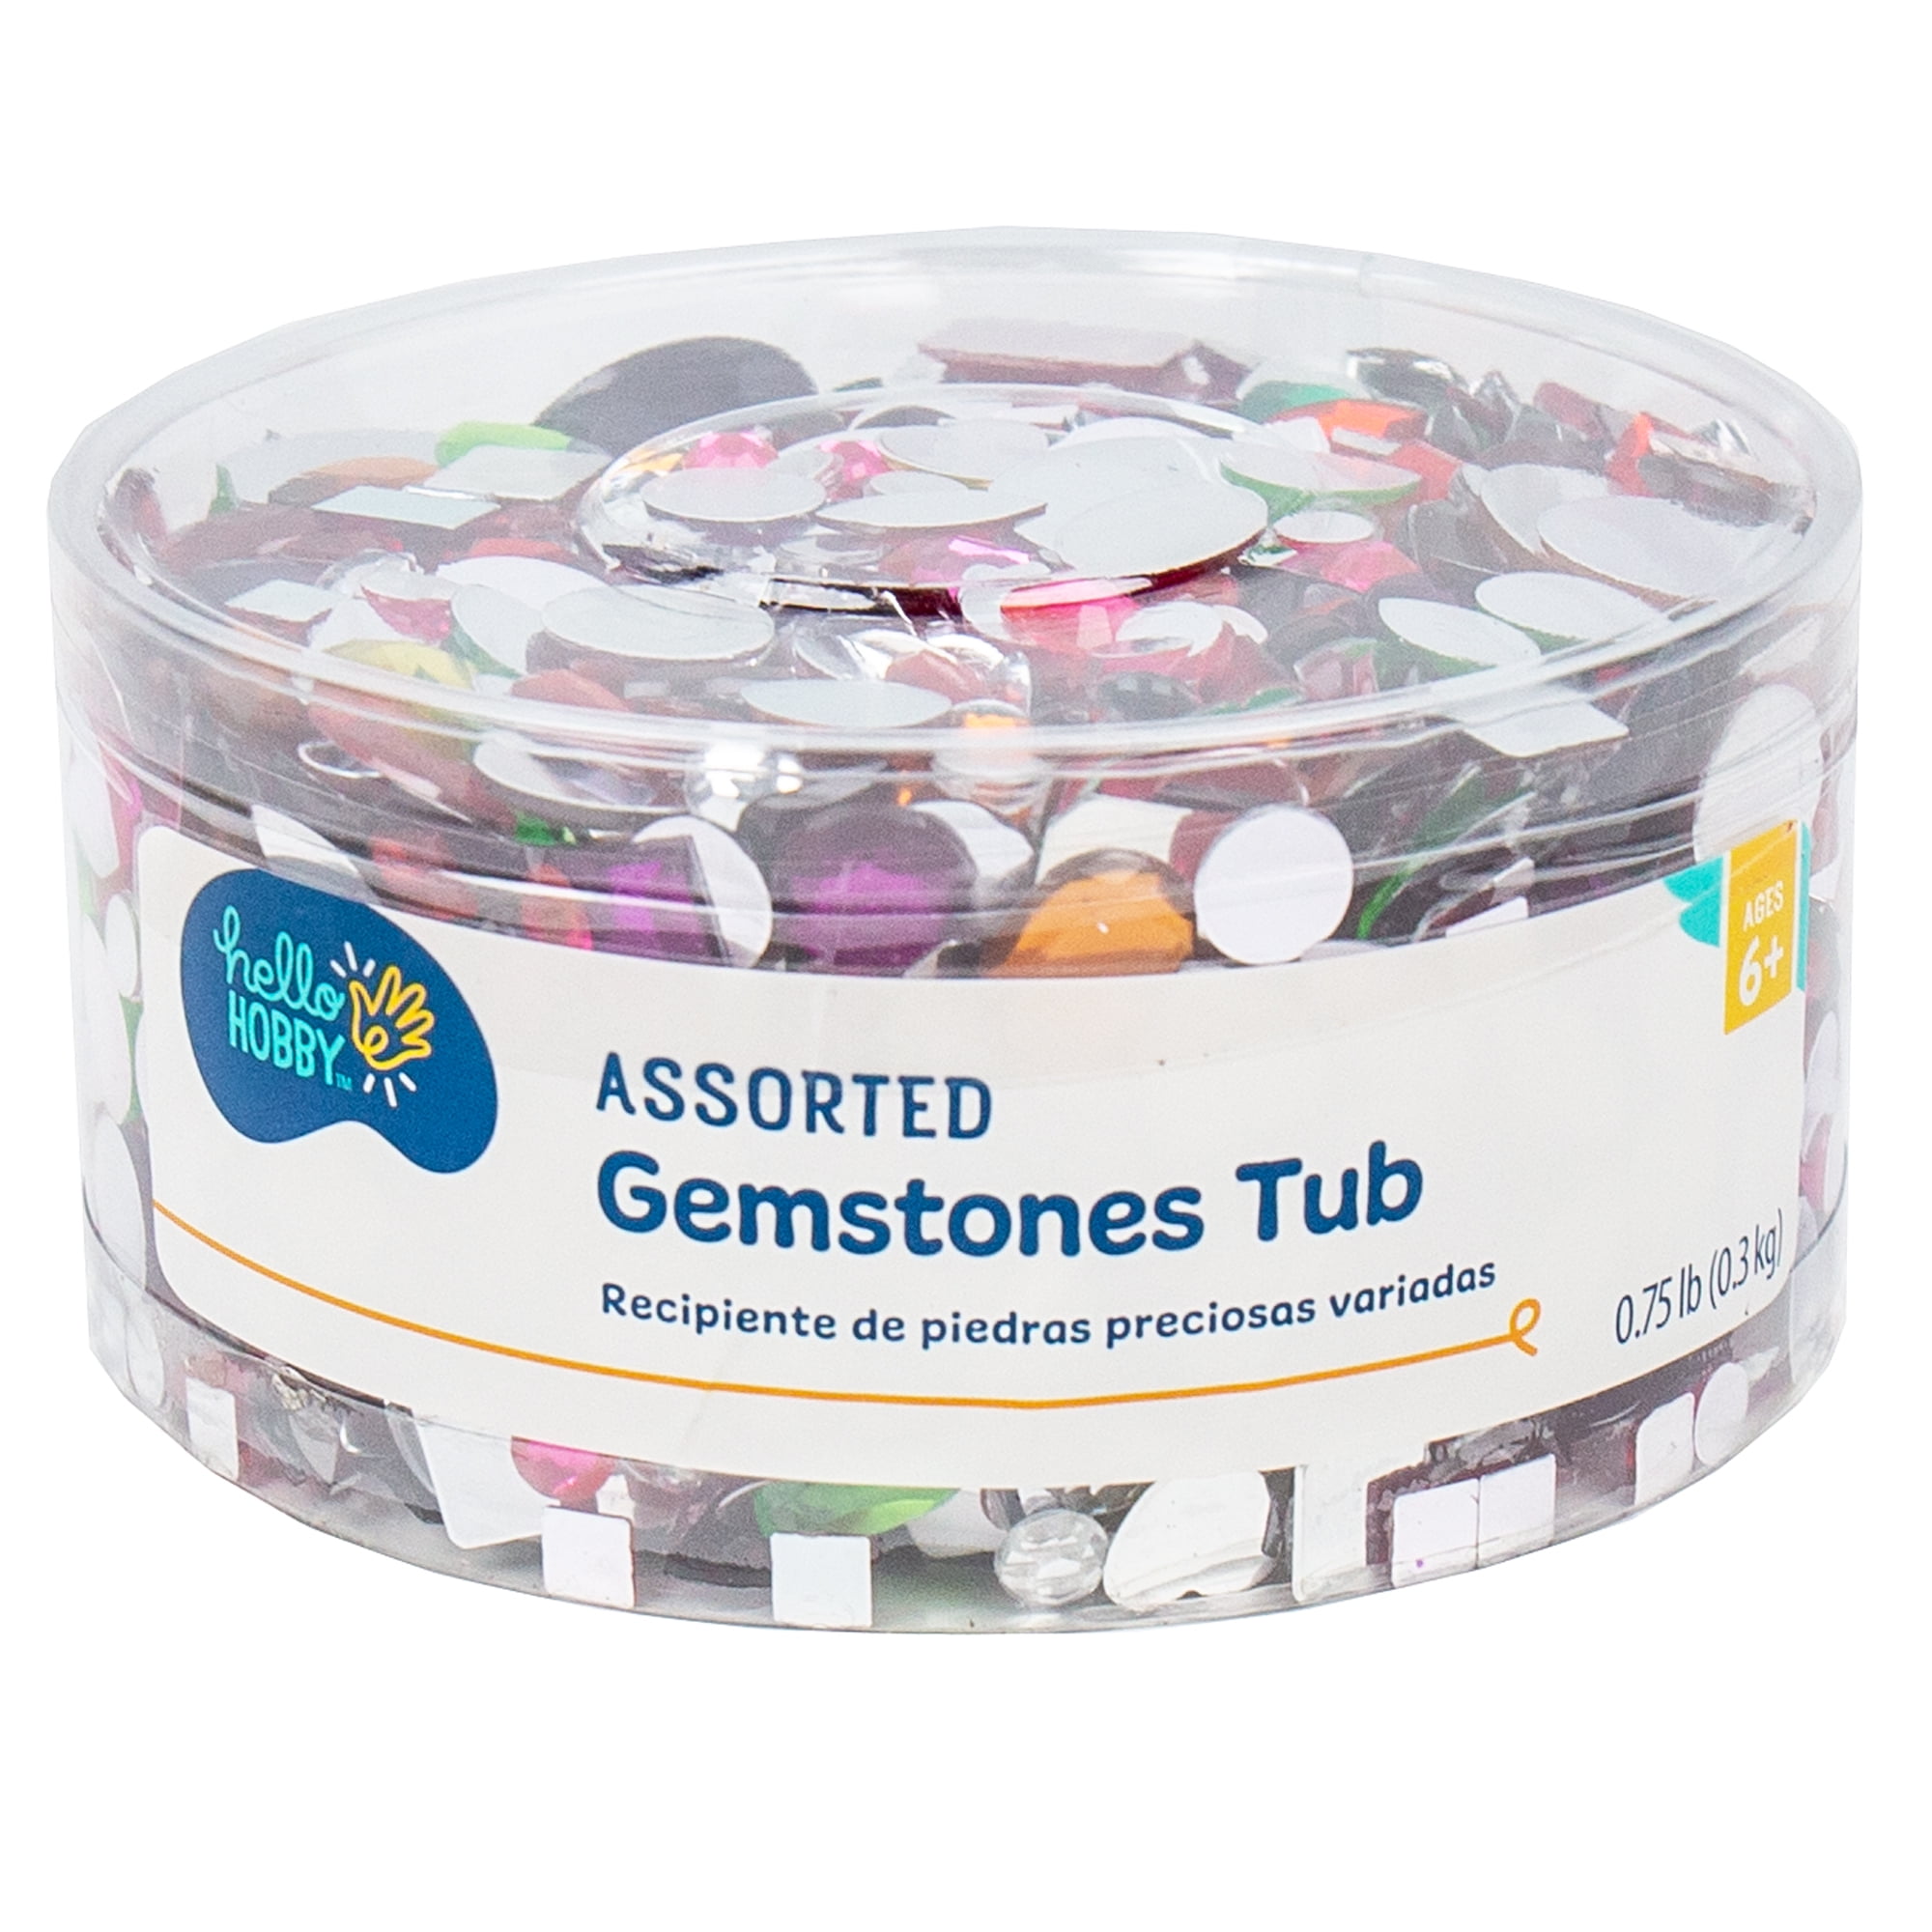 Hello Hobby Assorted Gemstones Tub